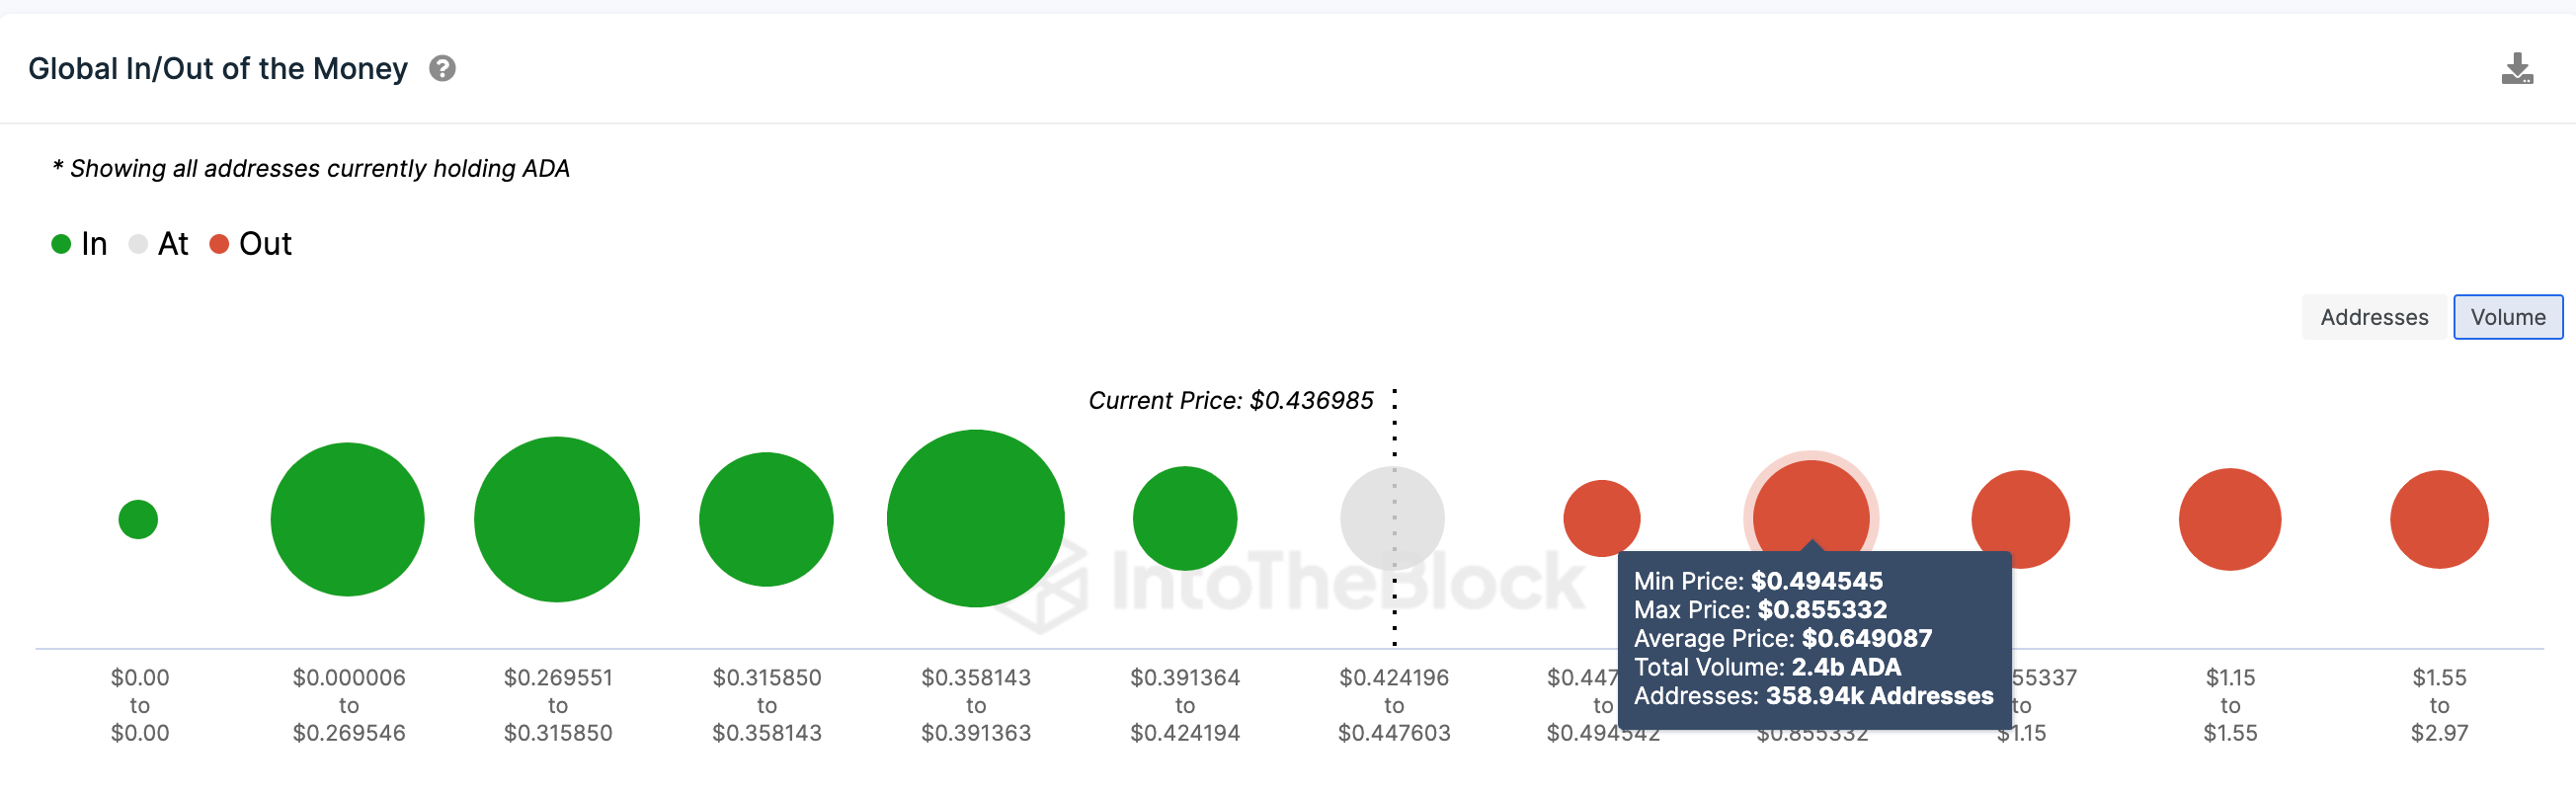 Cardano (ADA) Price Forecast | GIOM data | Source: IntoTheBlock